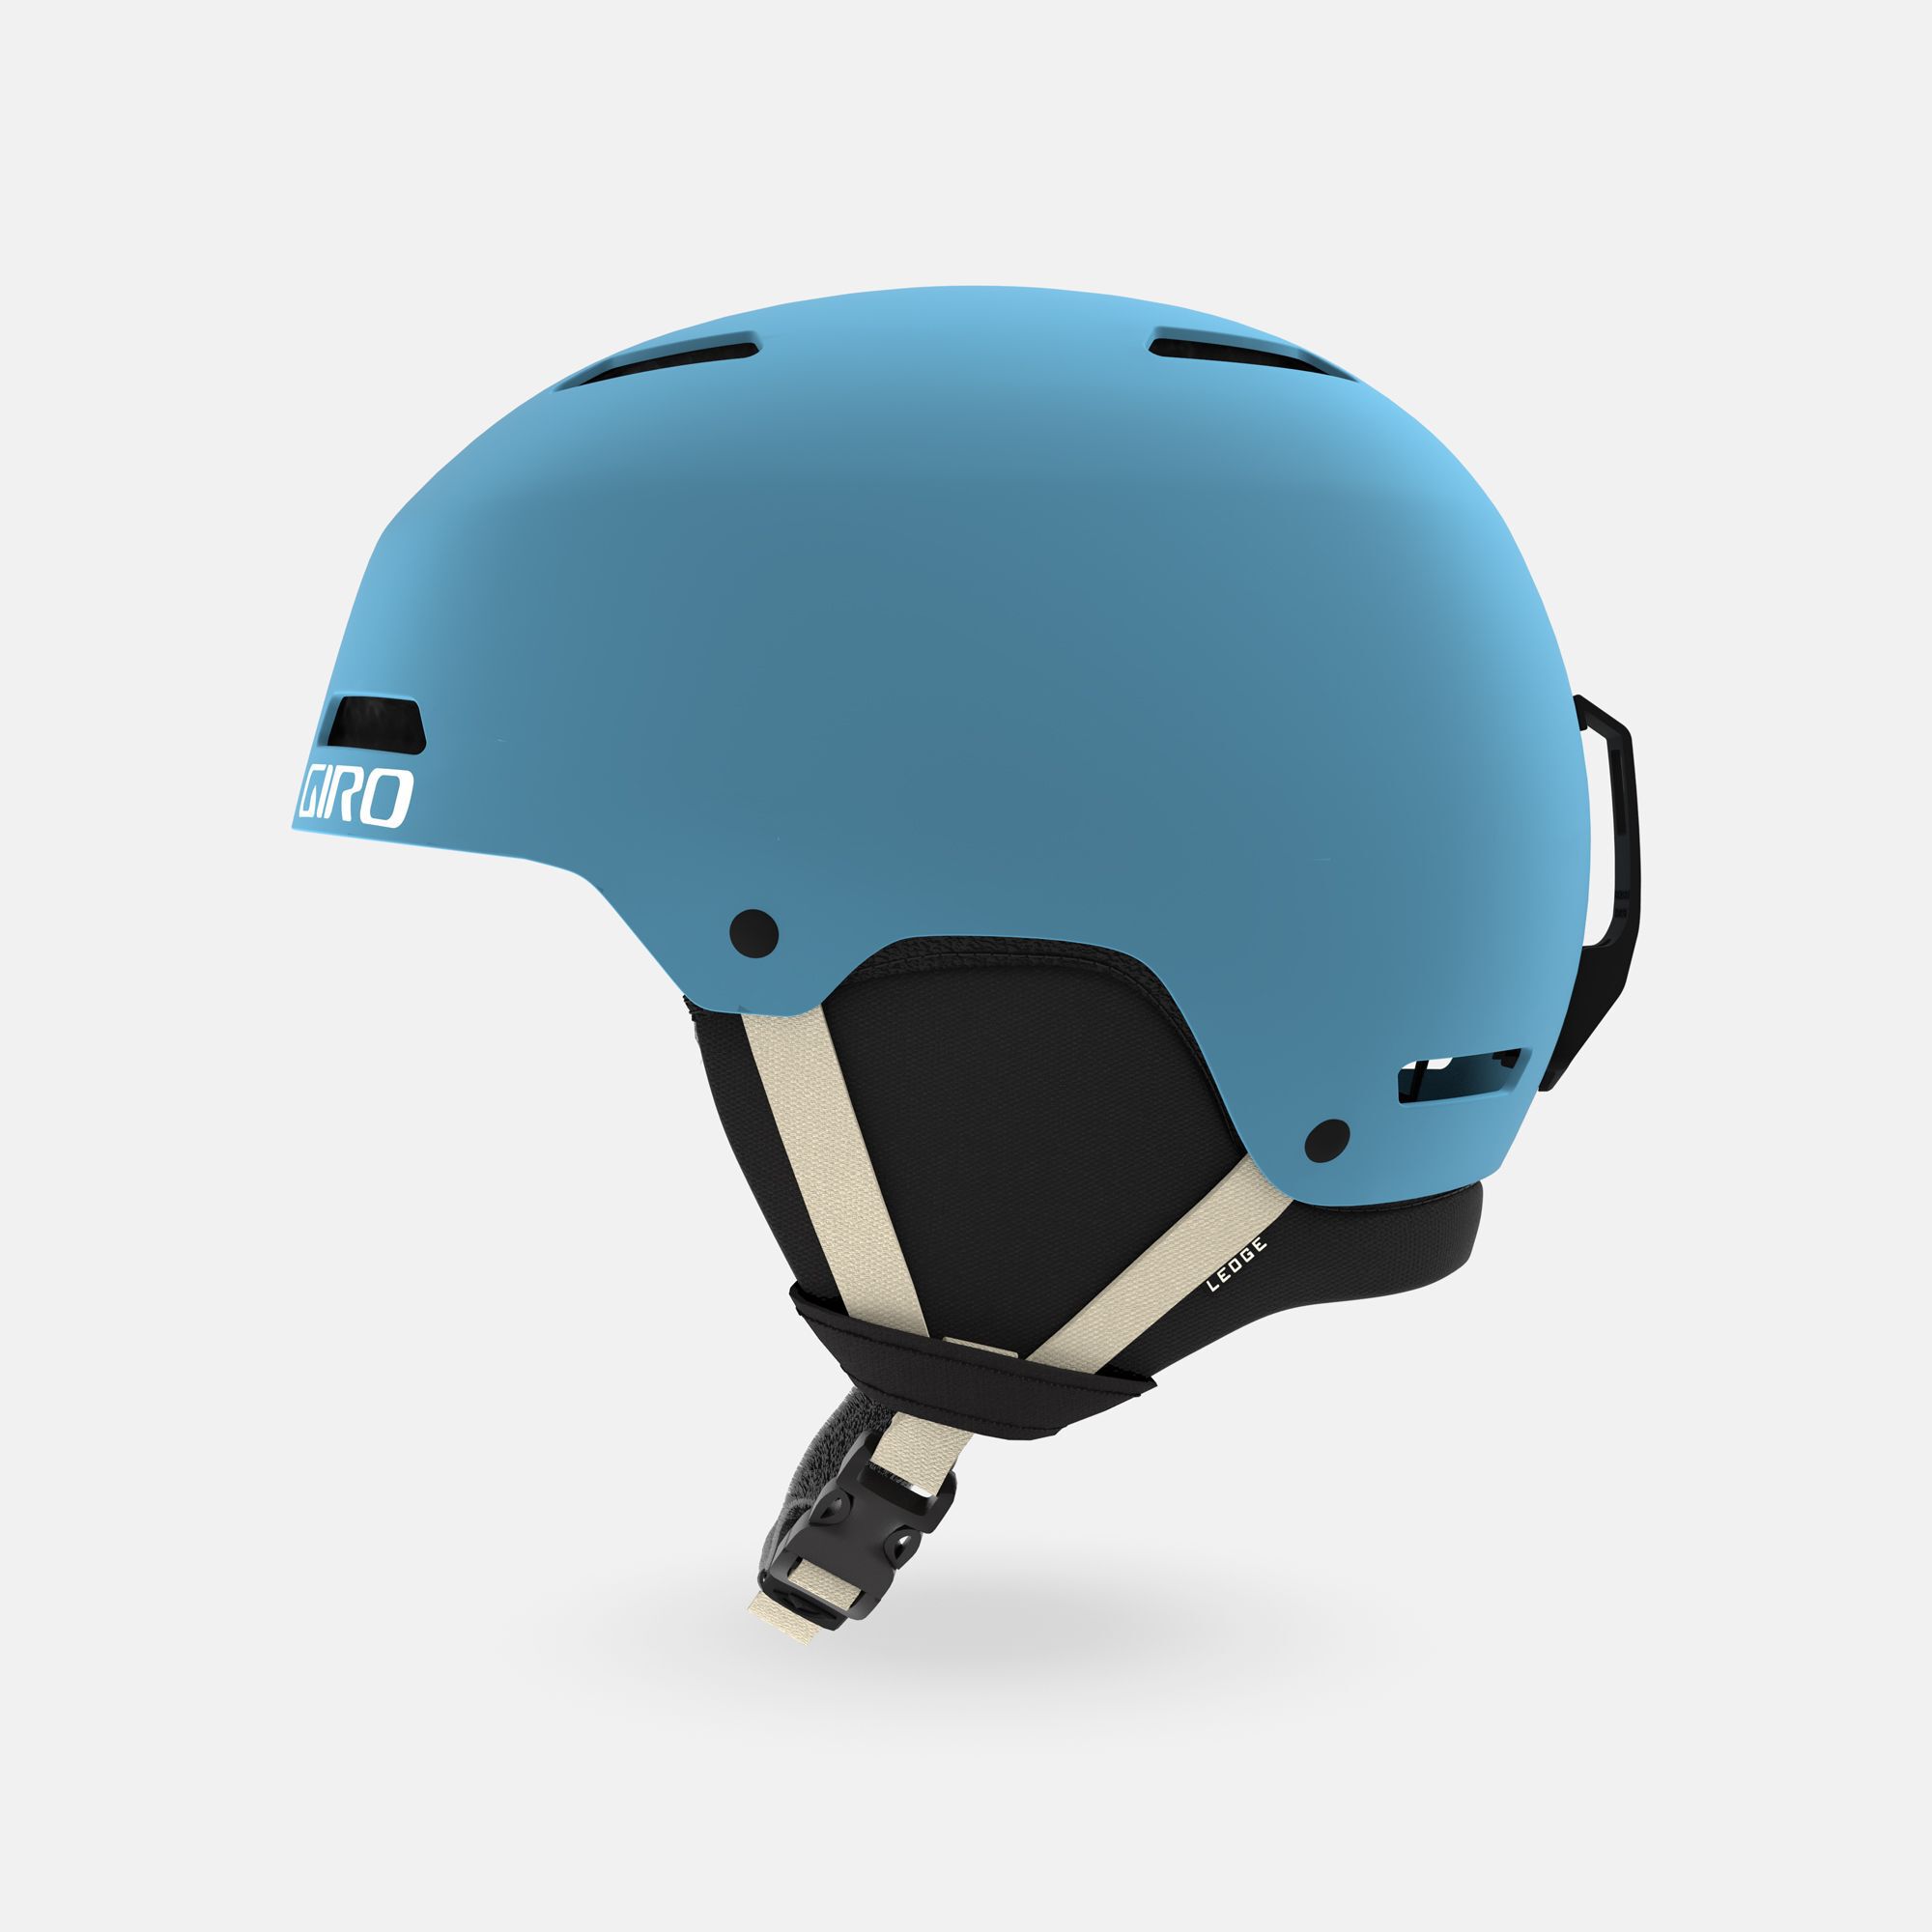 Huge Discount Small Size Osbe Bellagio Ski Snowboard Helmet 